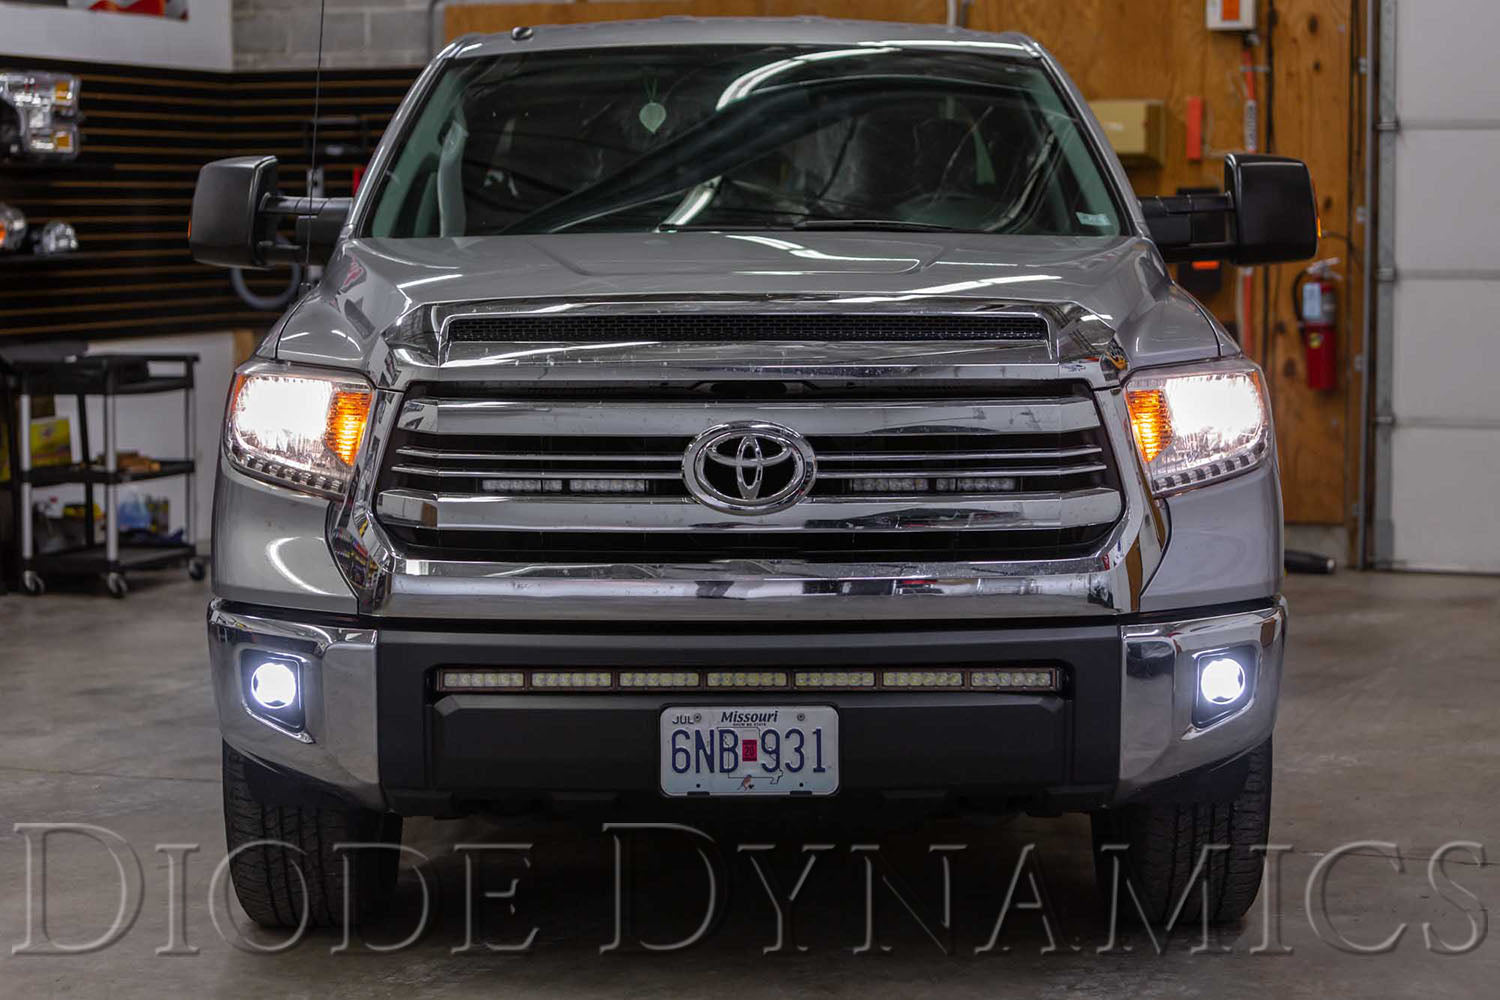 SS3 LED Fog Light Kit for 2014-2021 Toyota Tundra, White SAE/DOT Driving Pro